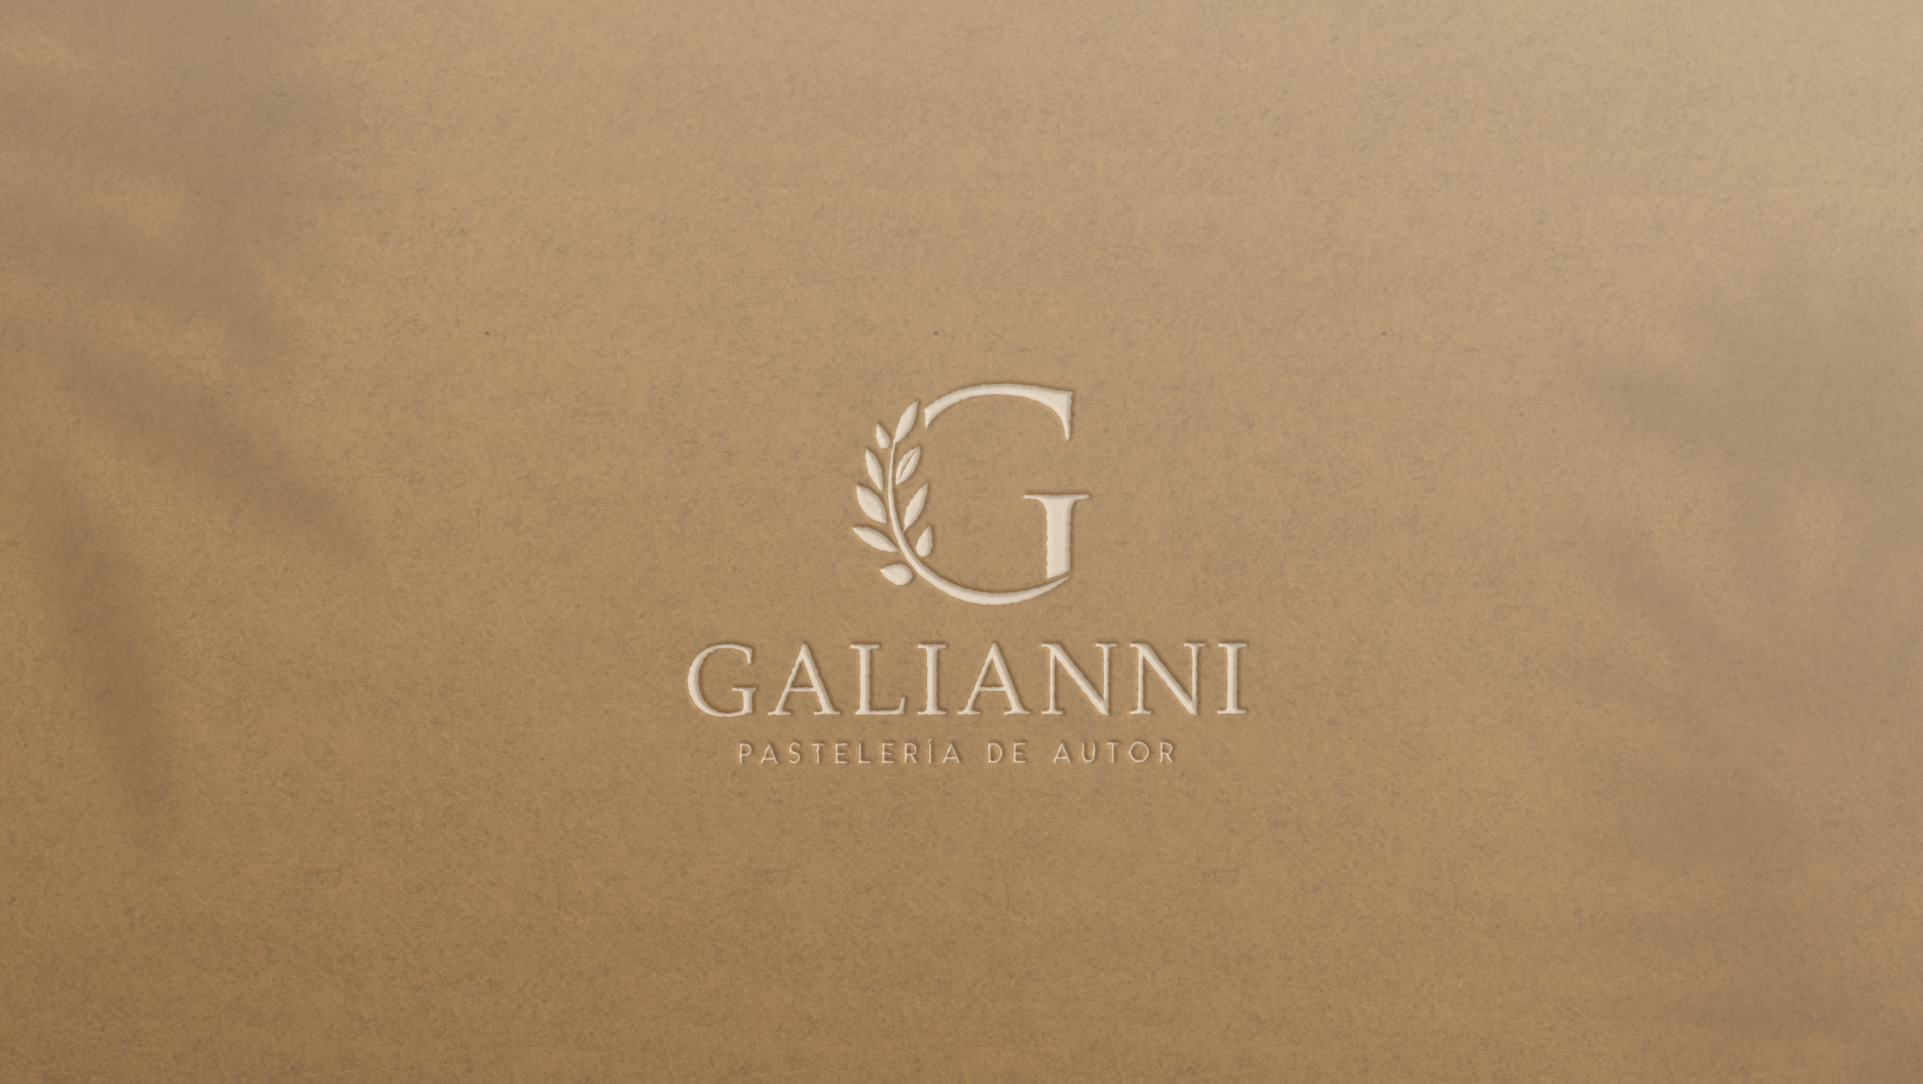 Galianni_LineGrafica-01.png